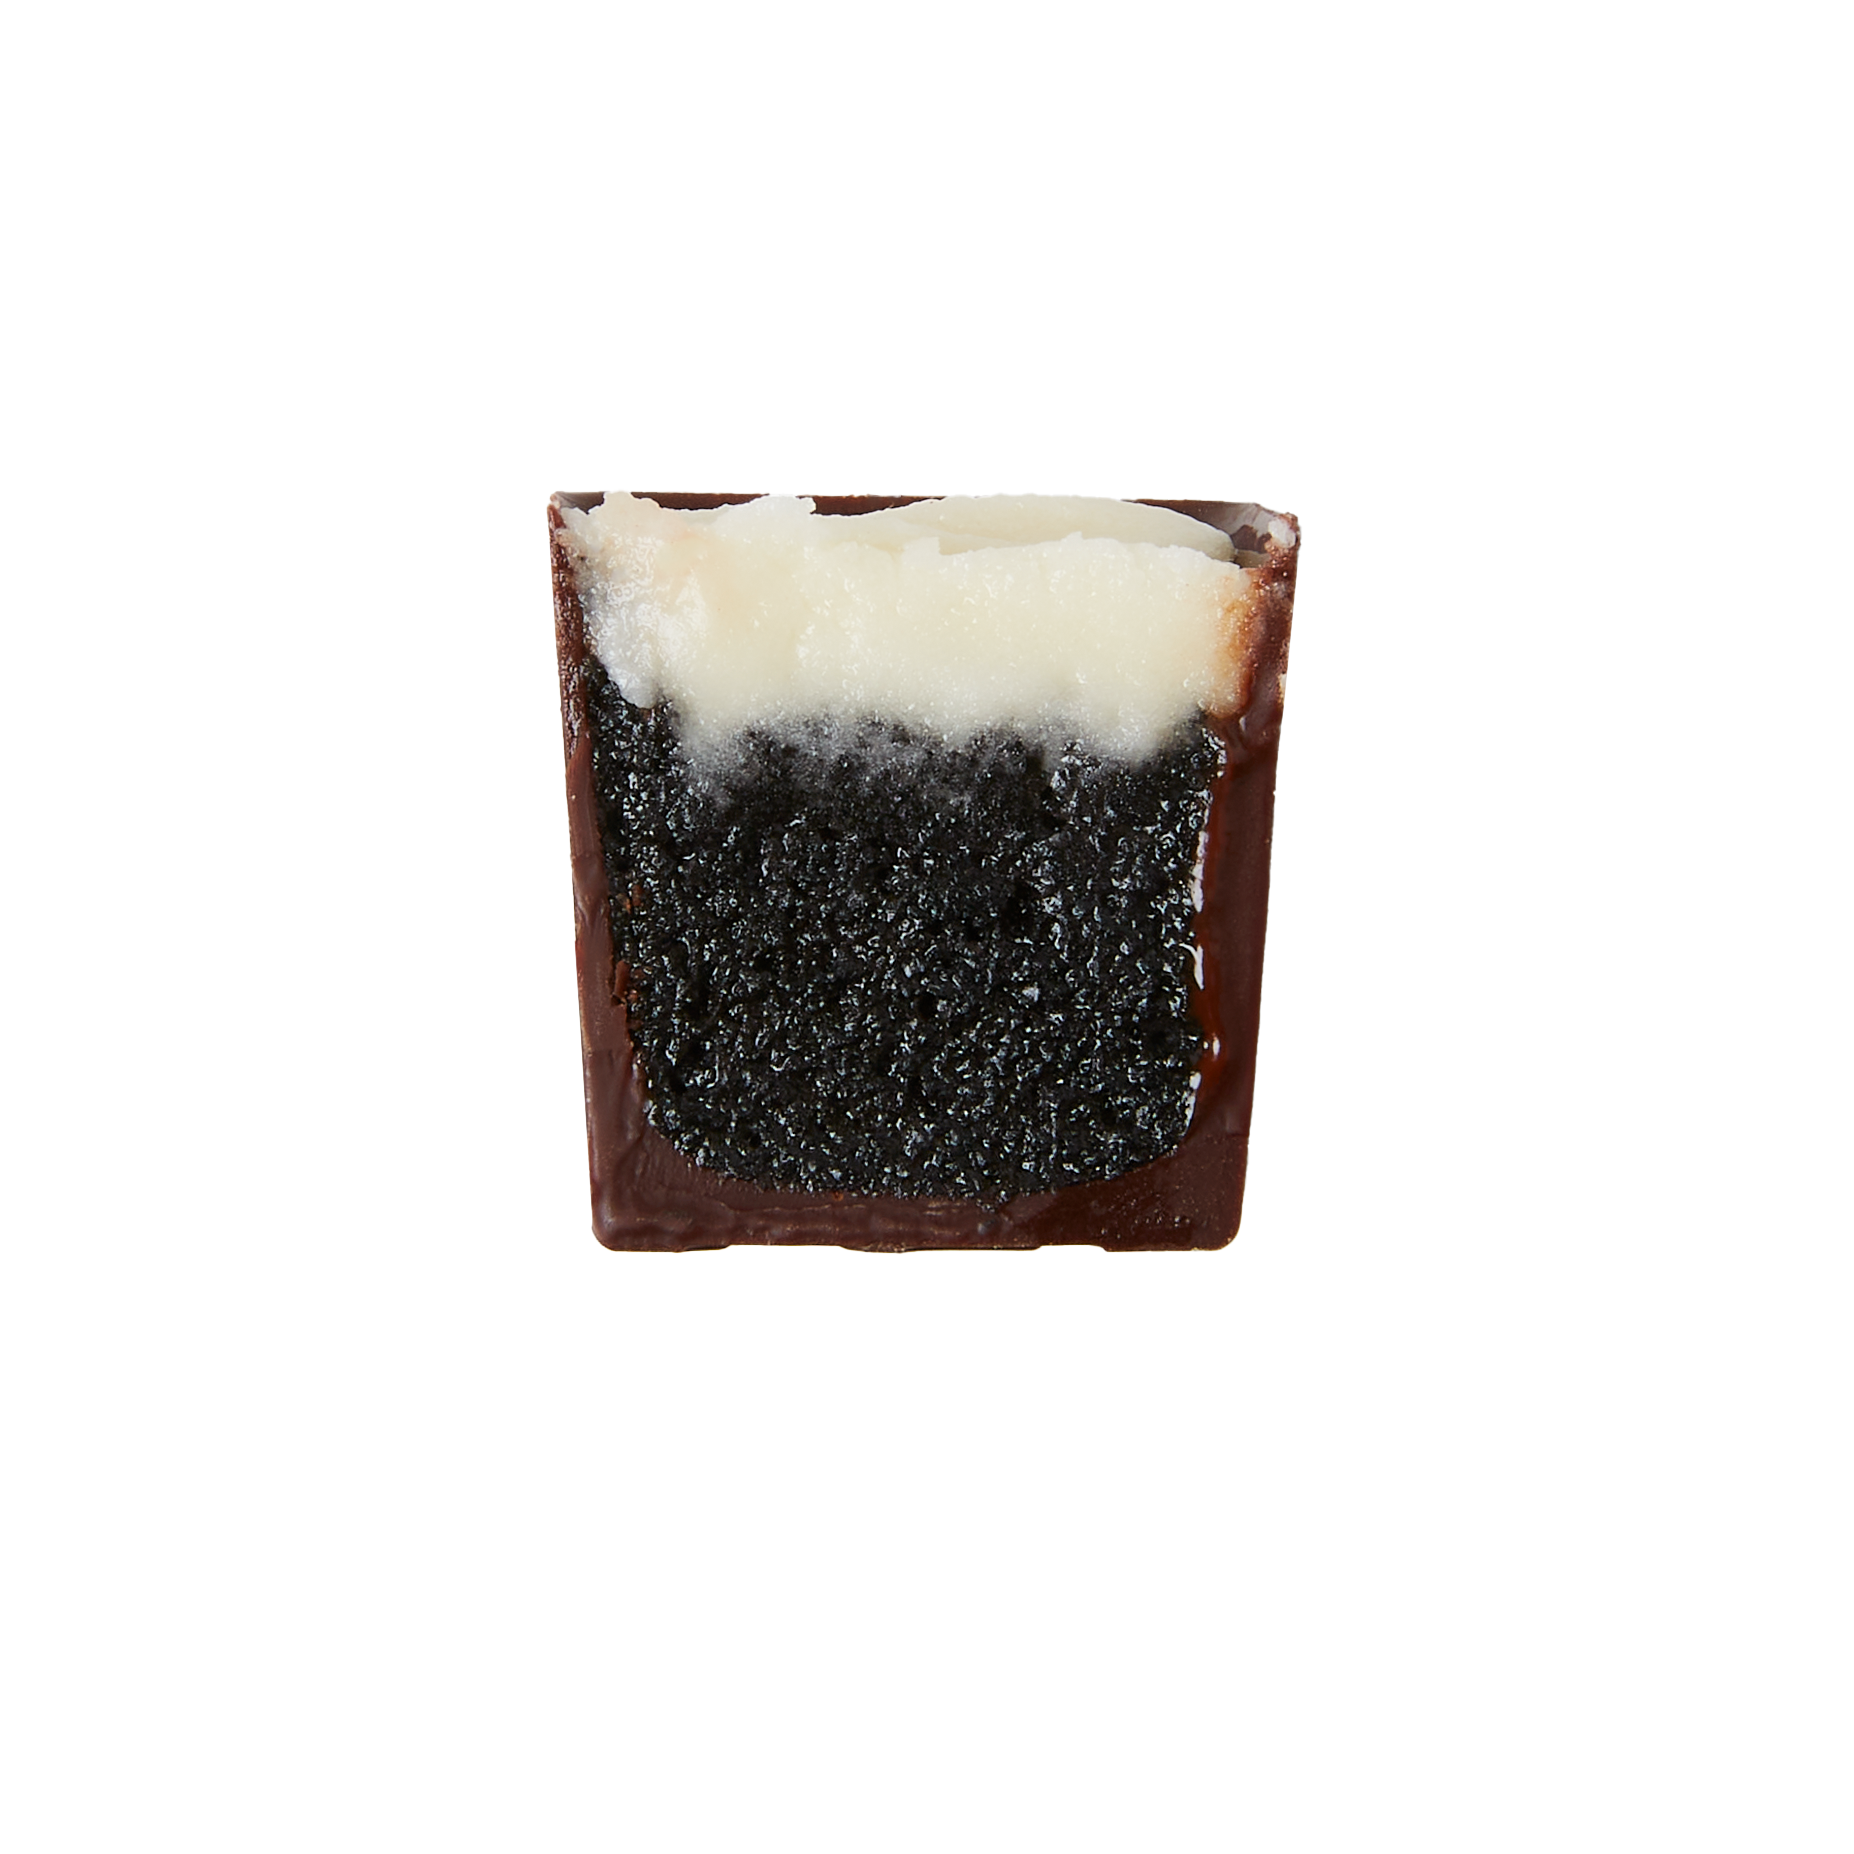 Bumpy-Fudgy chocolate cake cream bon bon cut in half